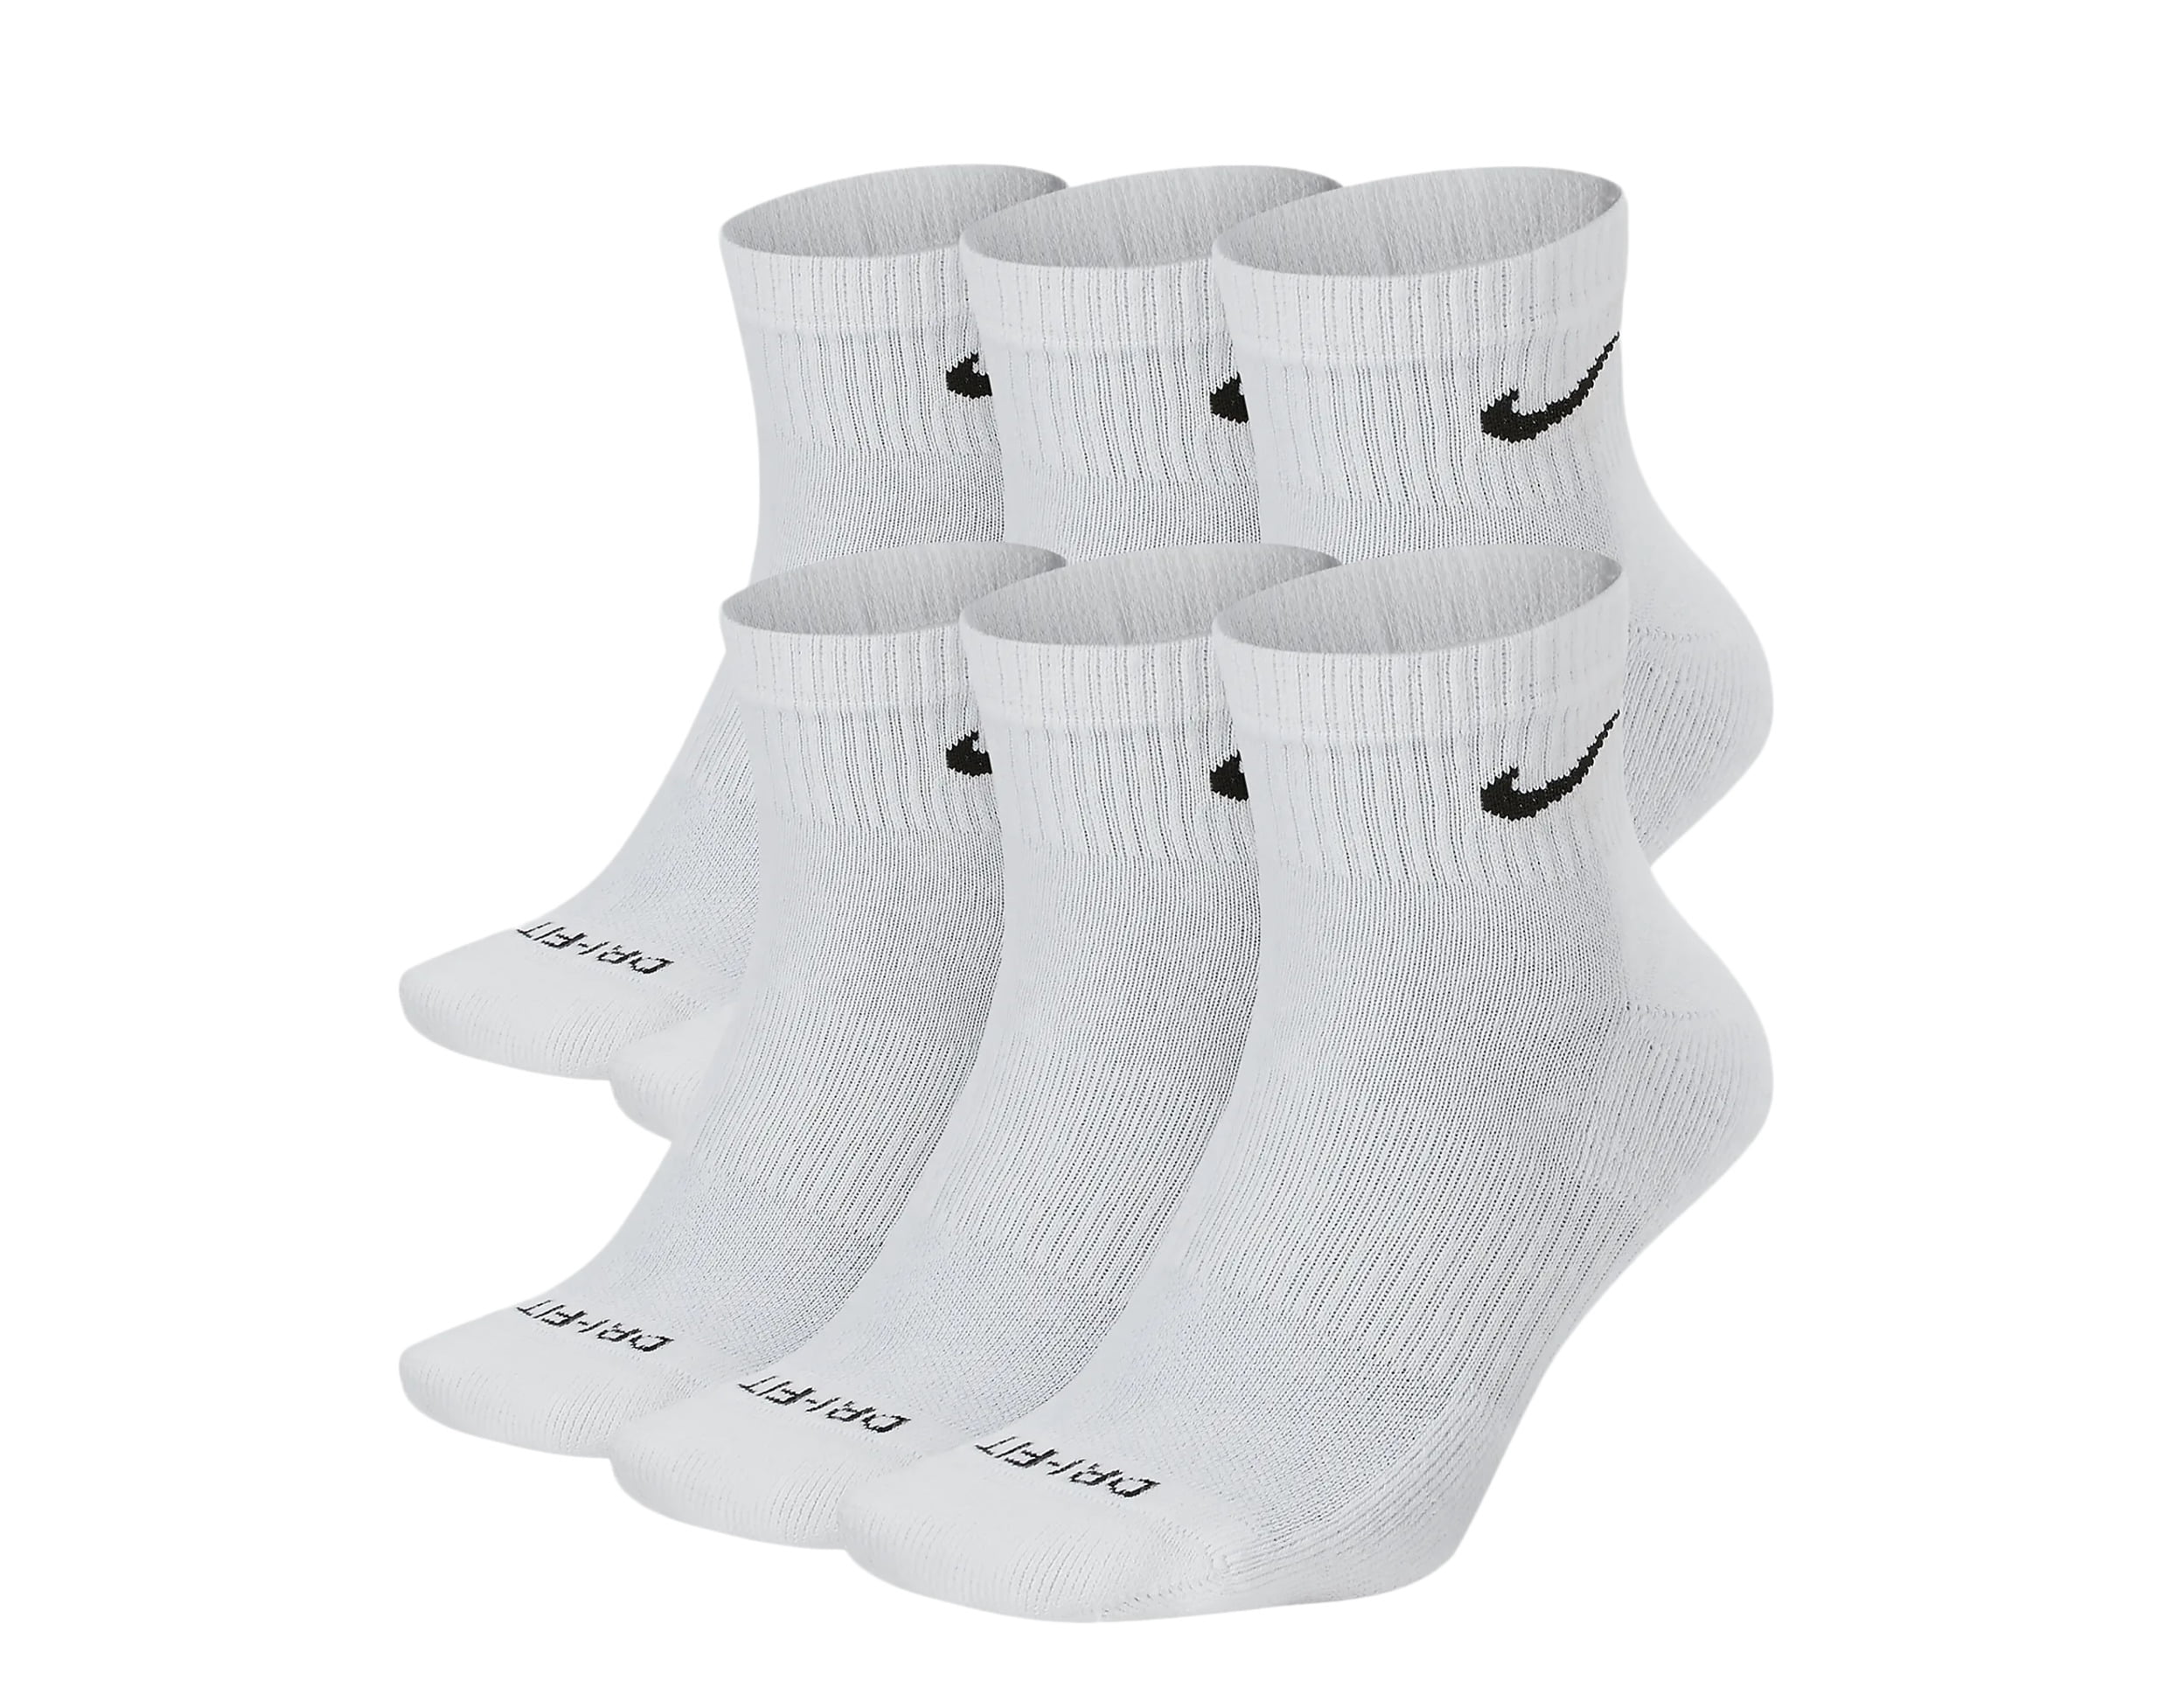 Nike Everyday Plus Cushion Ankle White/Black Socks - 6 Pair Pack SX6899-100 Large (Men's Walmart.com